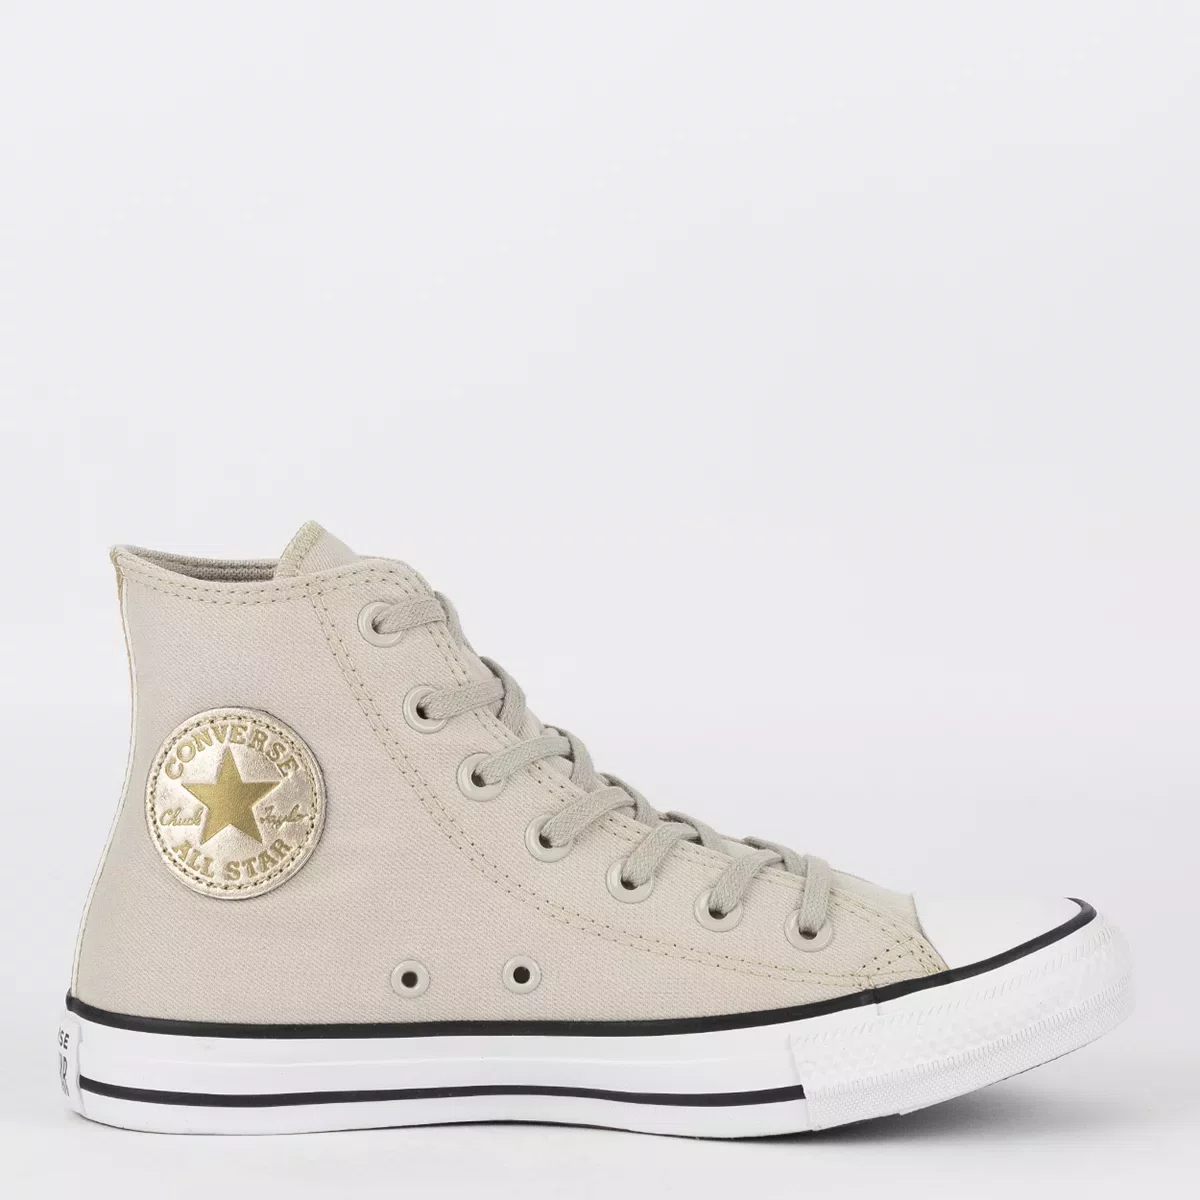 Tênis Converse Chuck Taylor All Star Branco - Shopping do Calçado